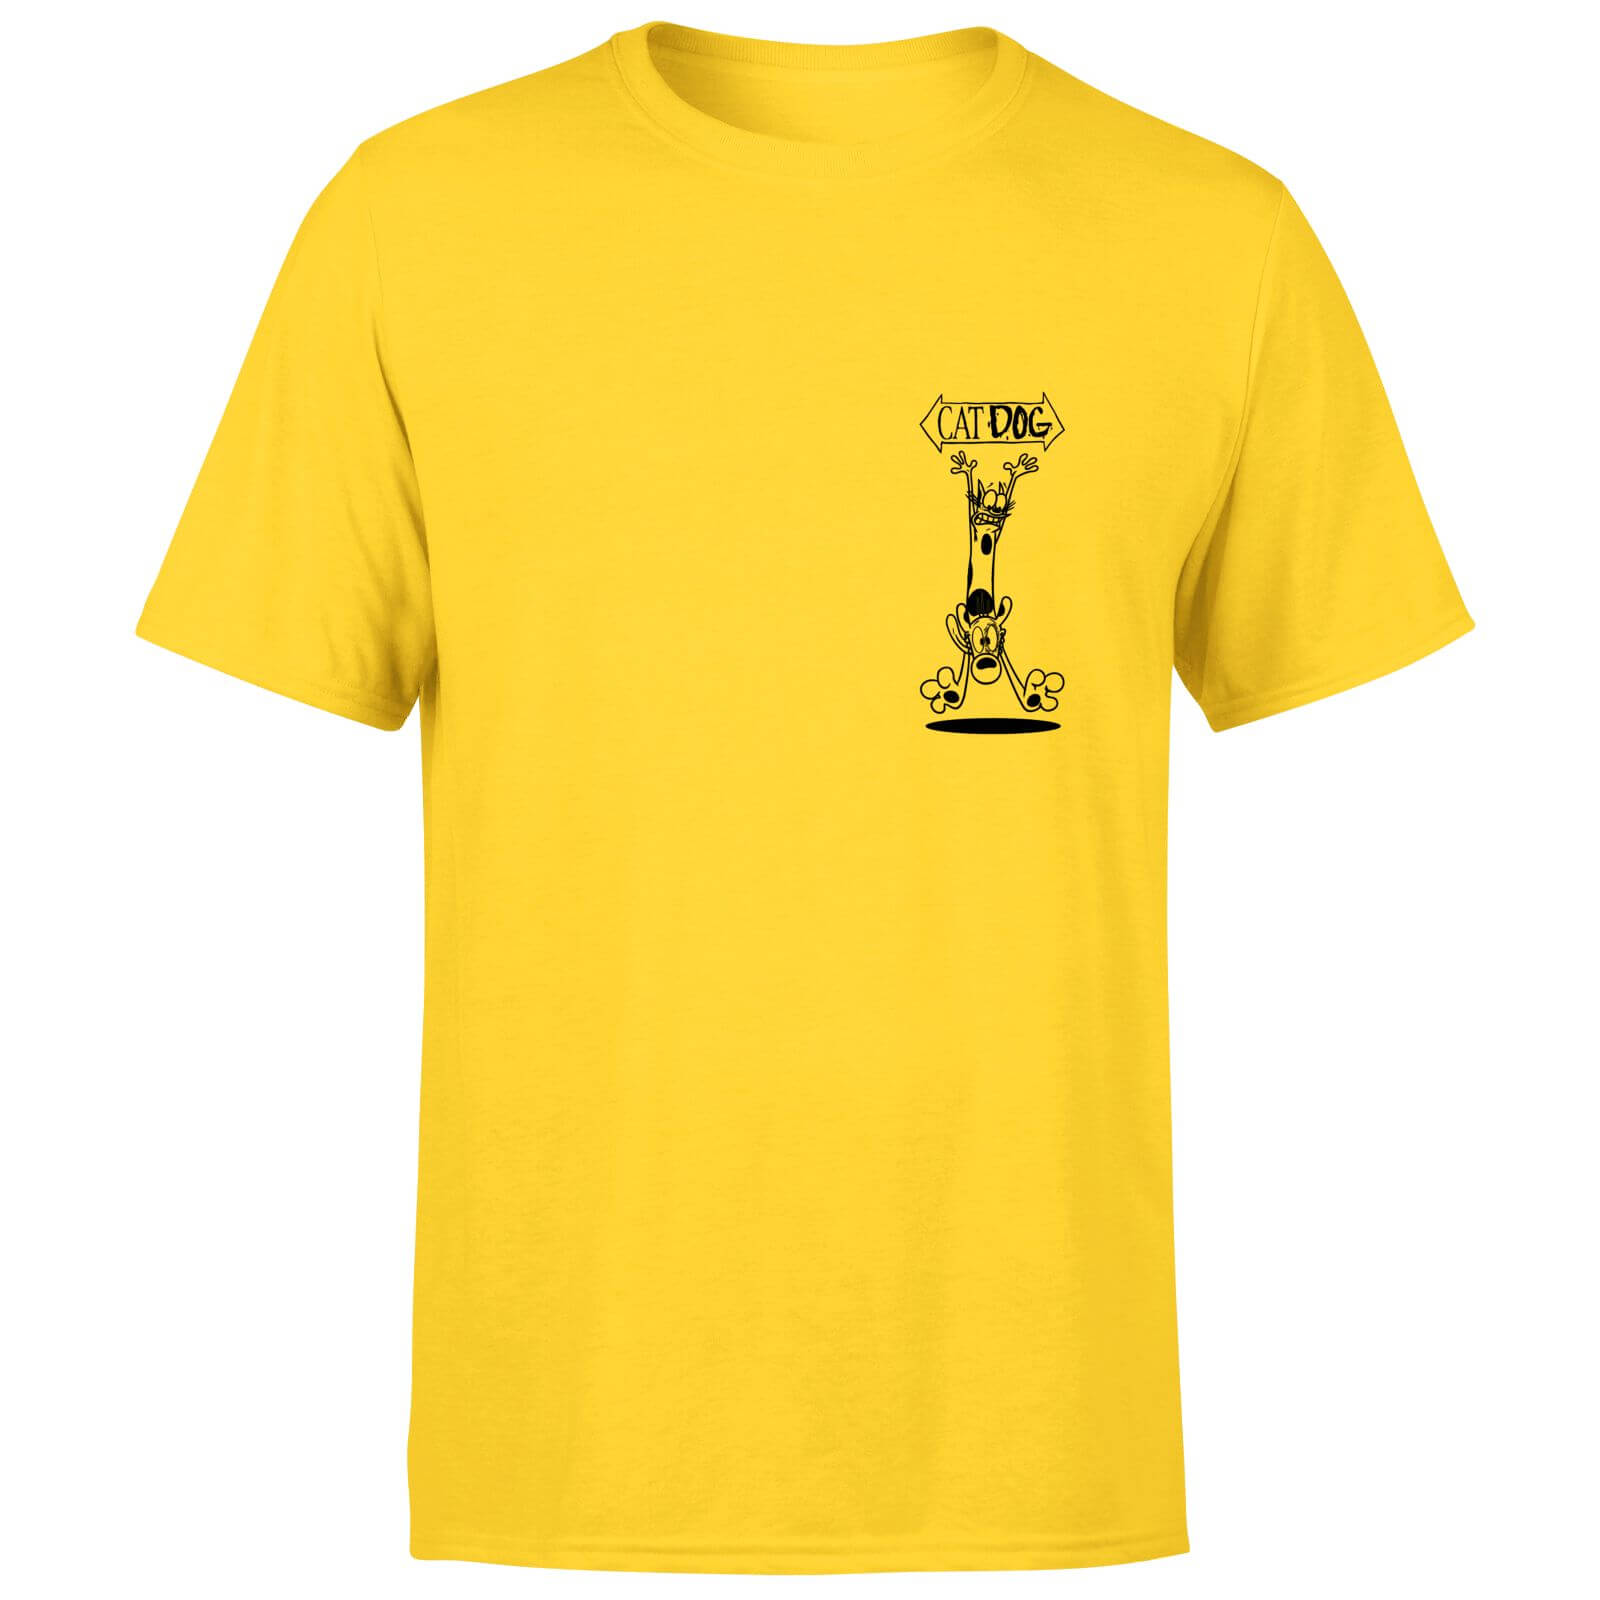 CatDog Pocket Square Unisex T-Shirt - Yellow - XS - Yellow